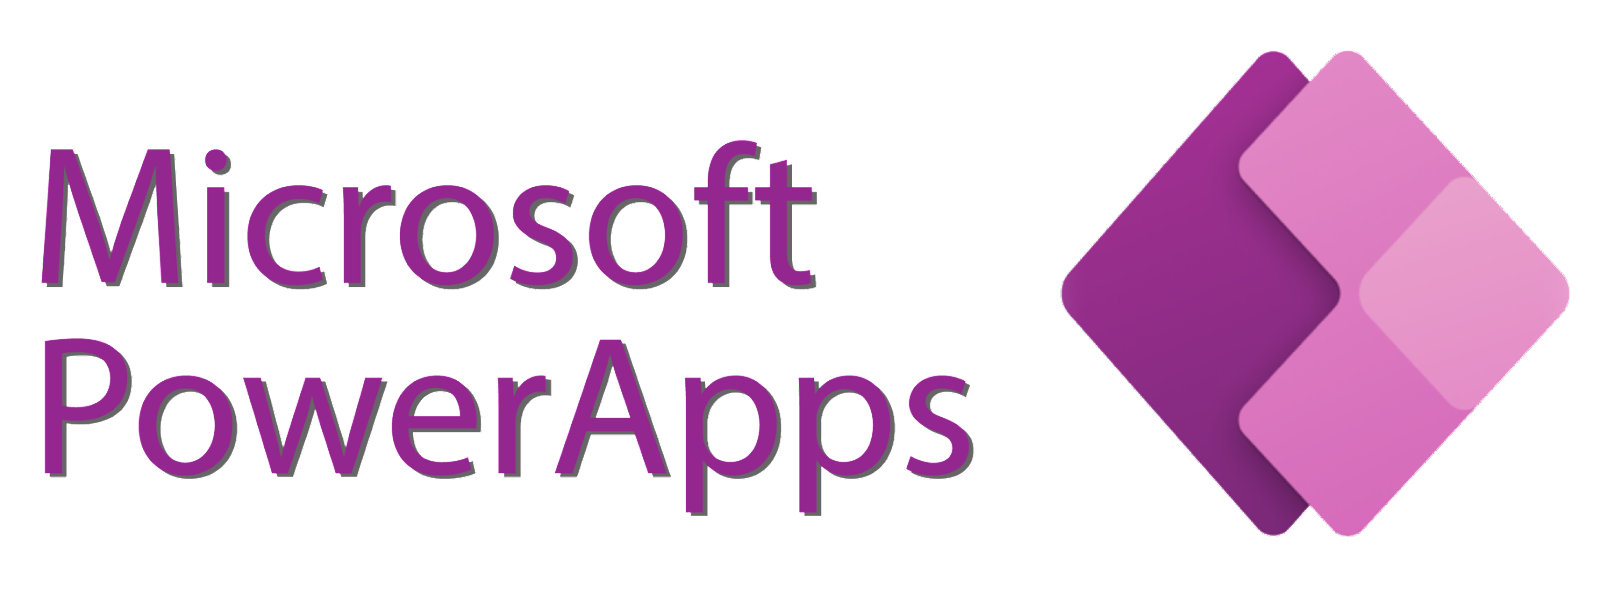 Microsoft PowerApps logo